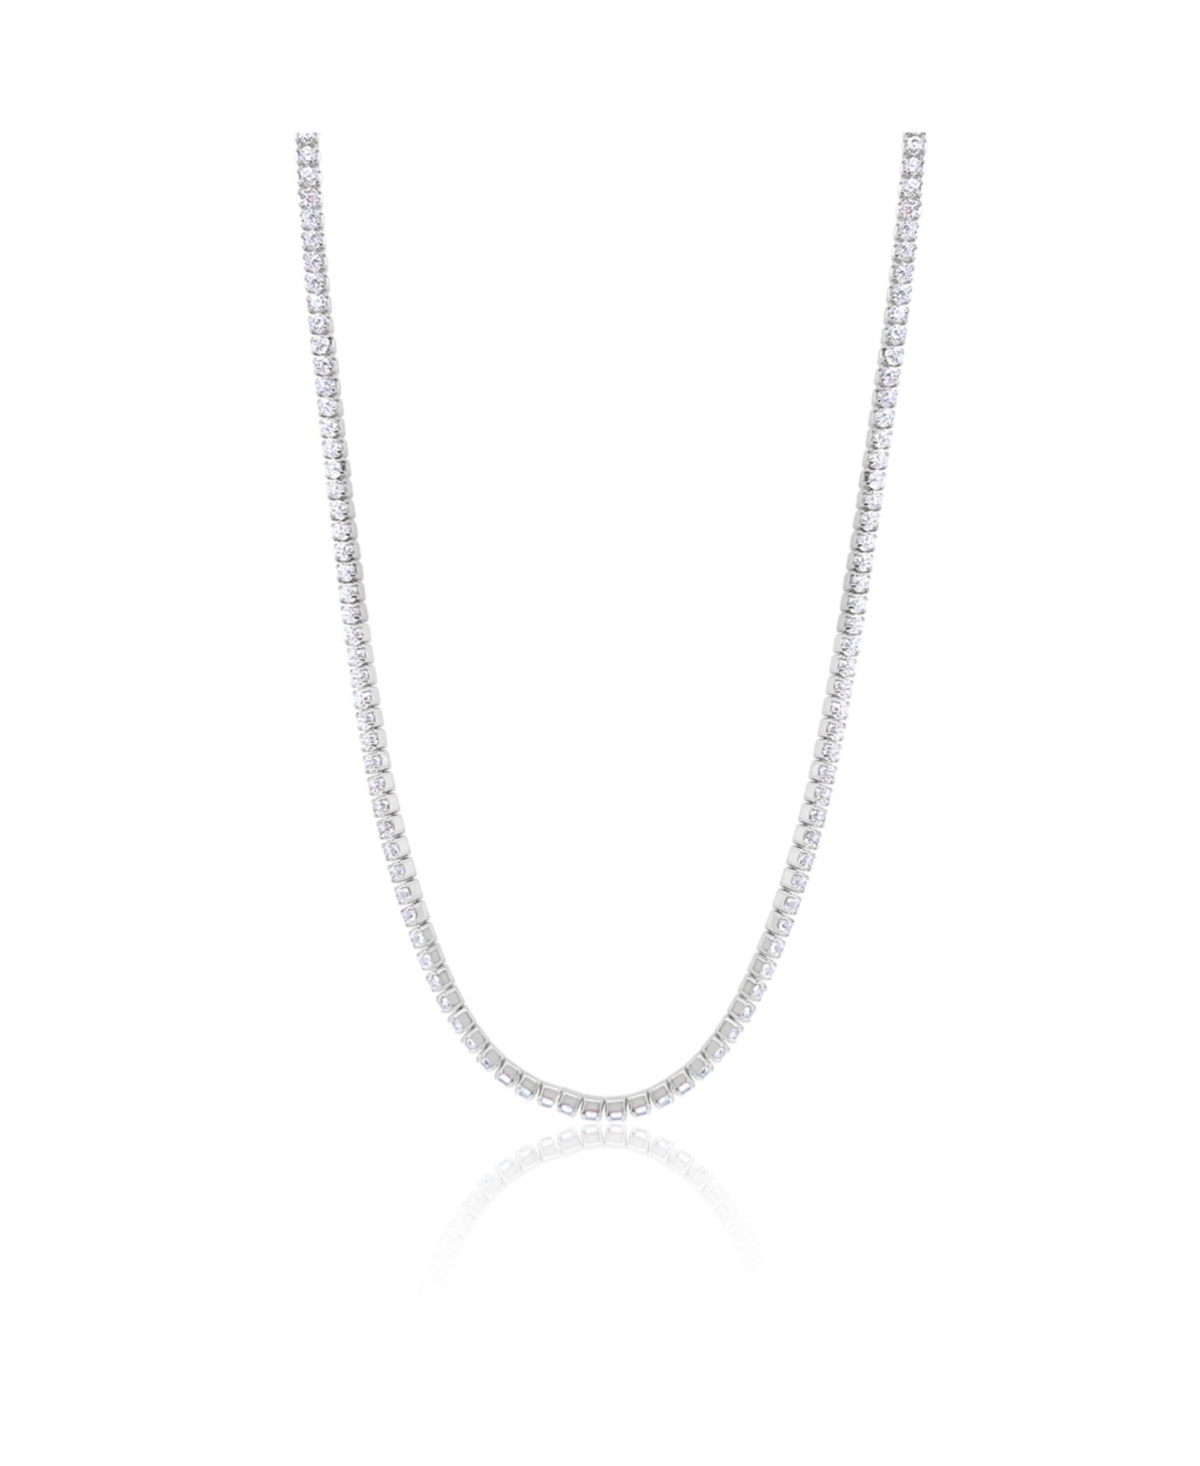 White Gold Tone Cz Tennis Choker Necklace - White